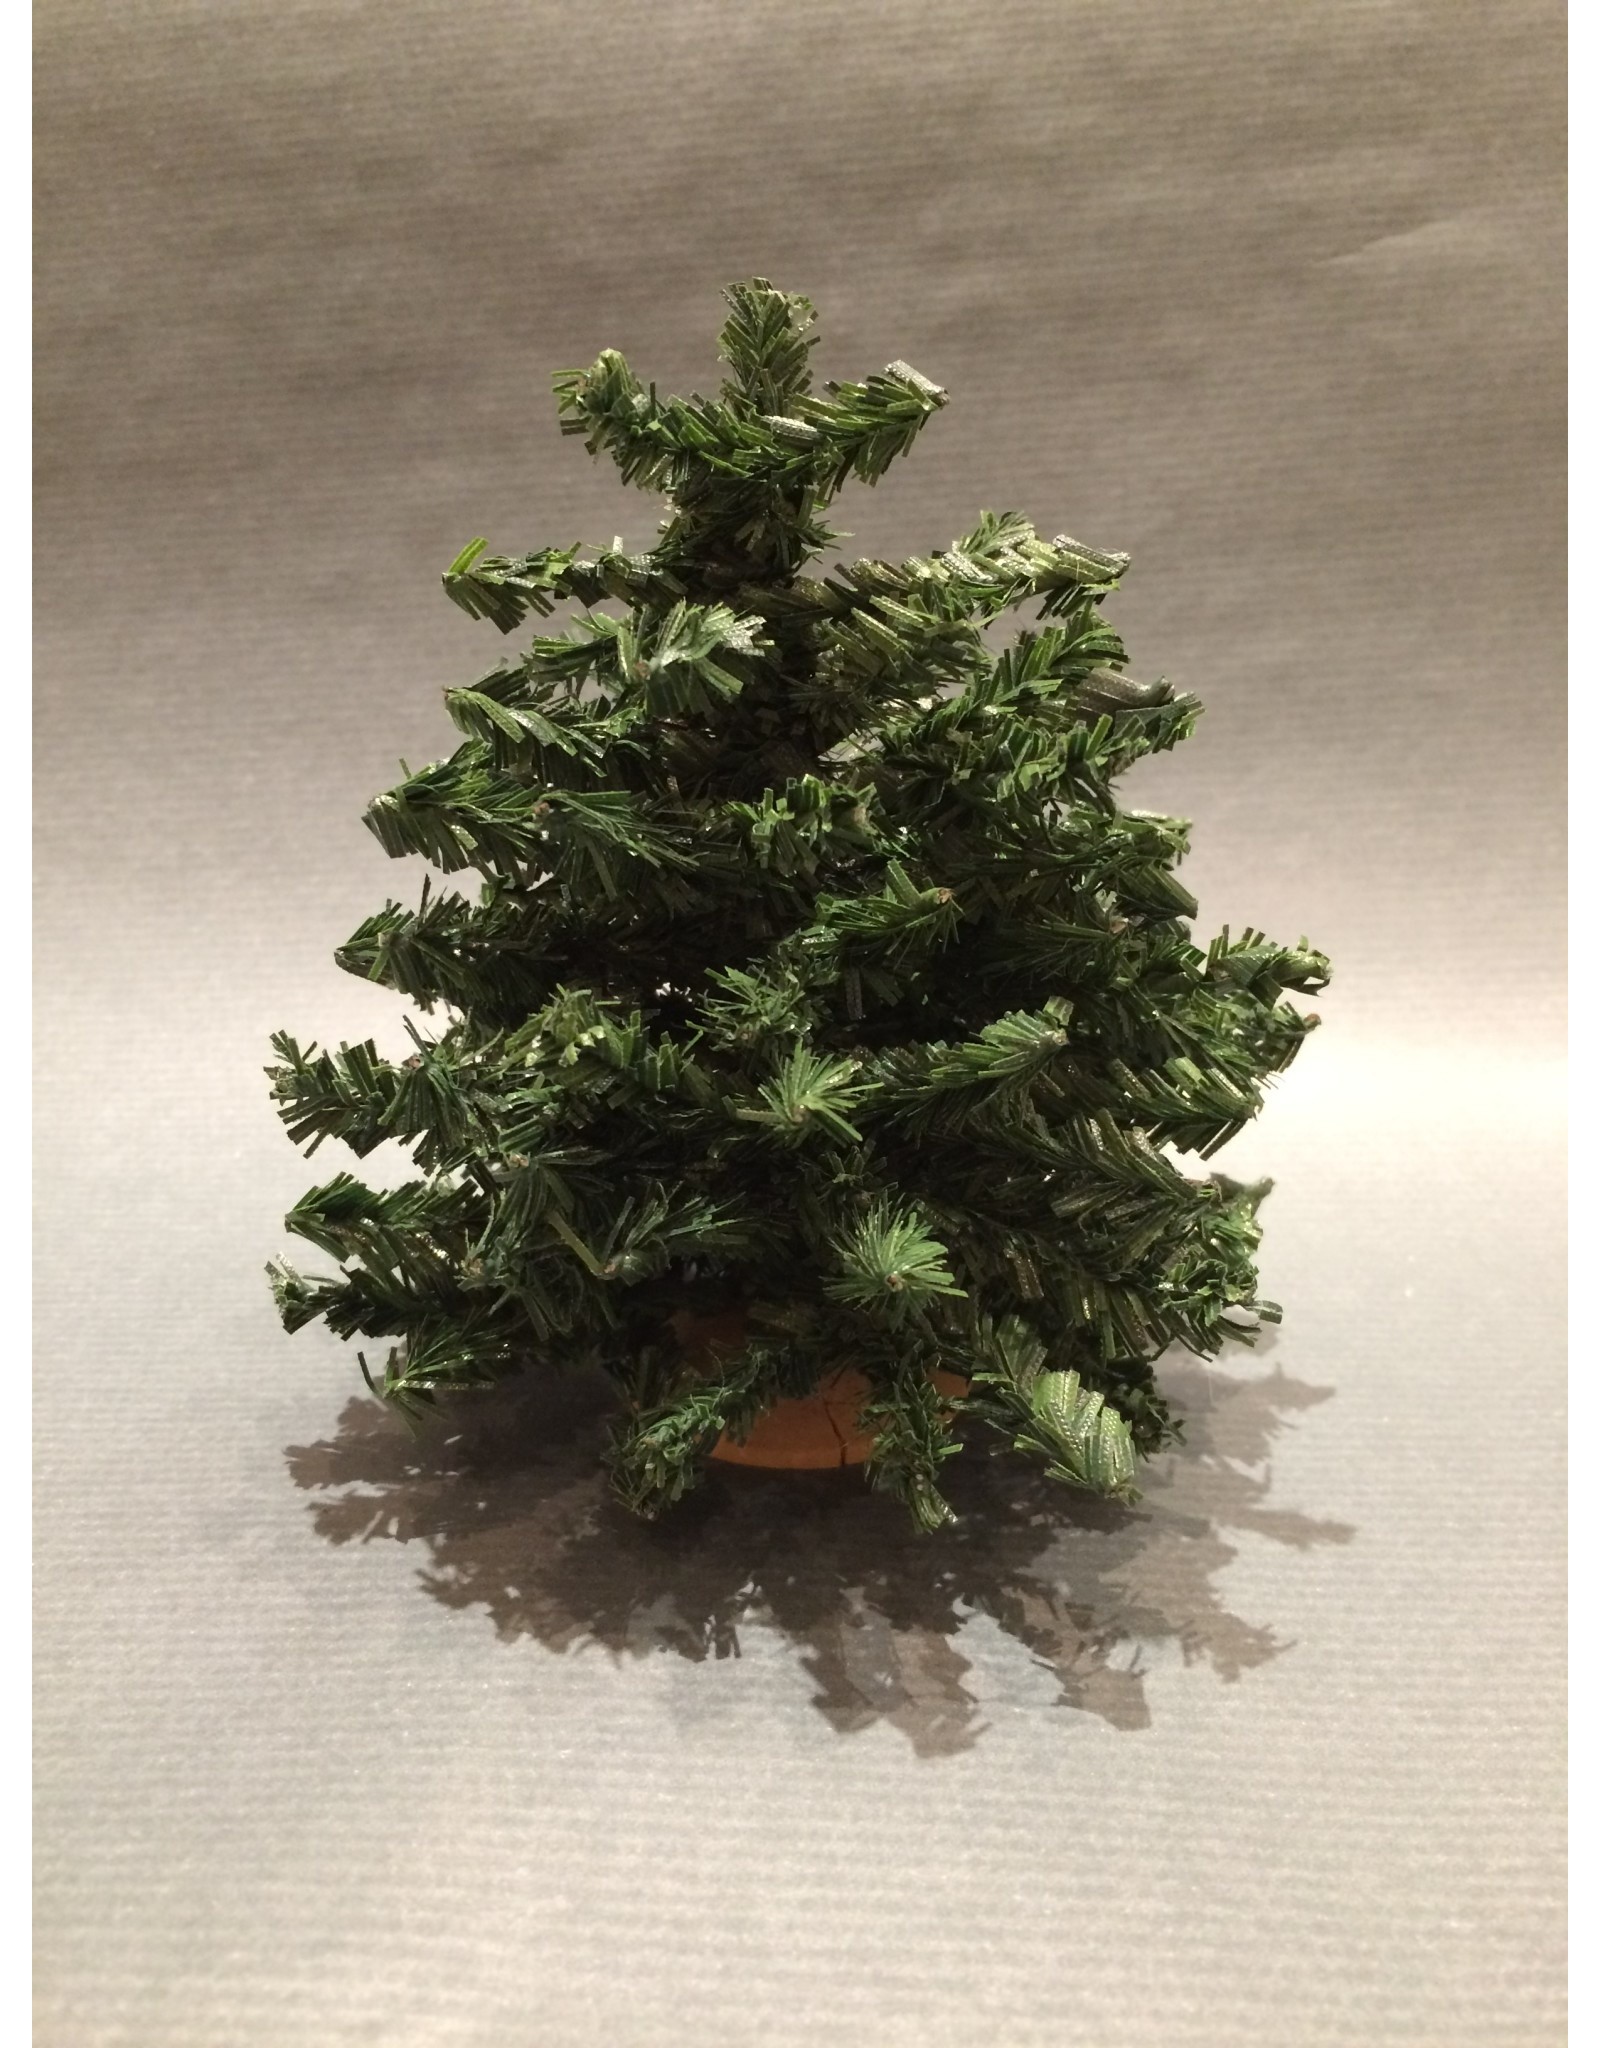 Petit sapin de Noël (10 cm) miniature 1:12